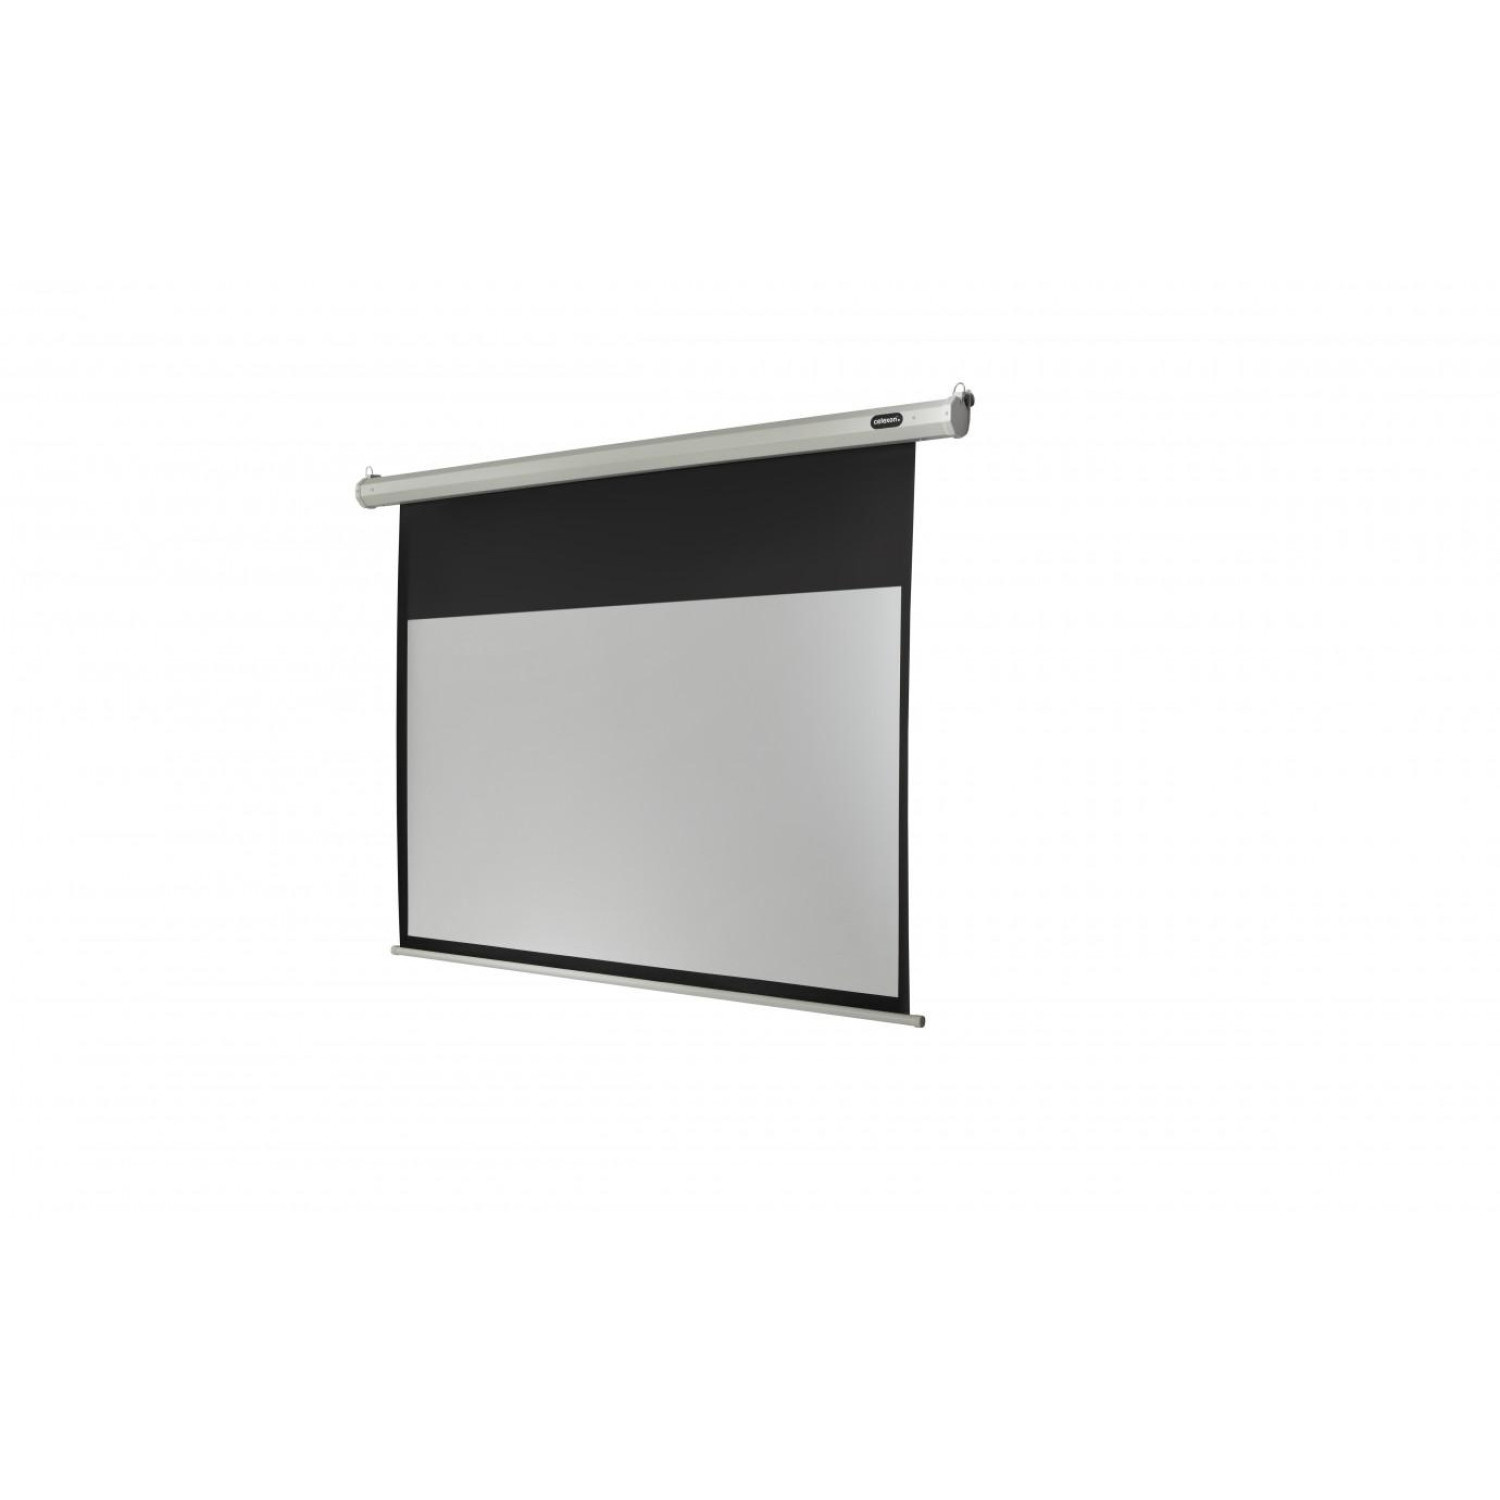 Електрически екран за стена CELEXON Electric Economy, с дист. управление, 300 x 169 cm, 16:9, Matte white